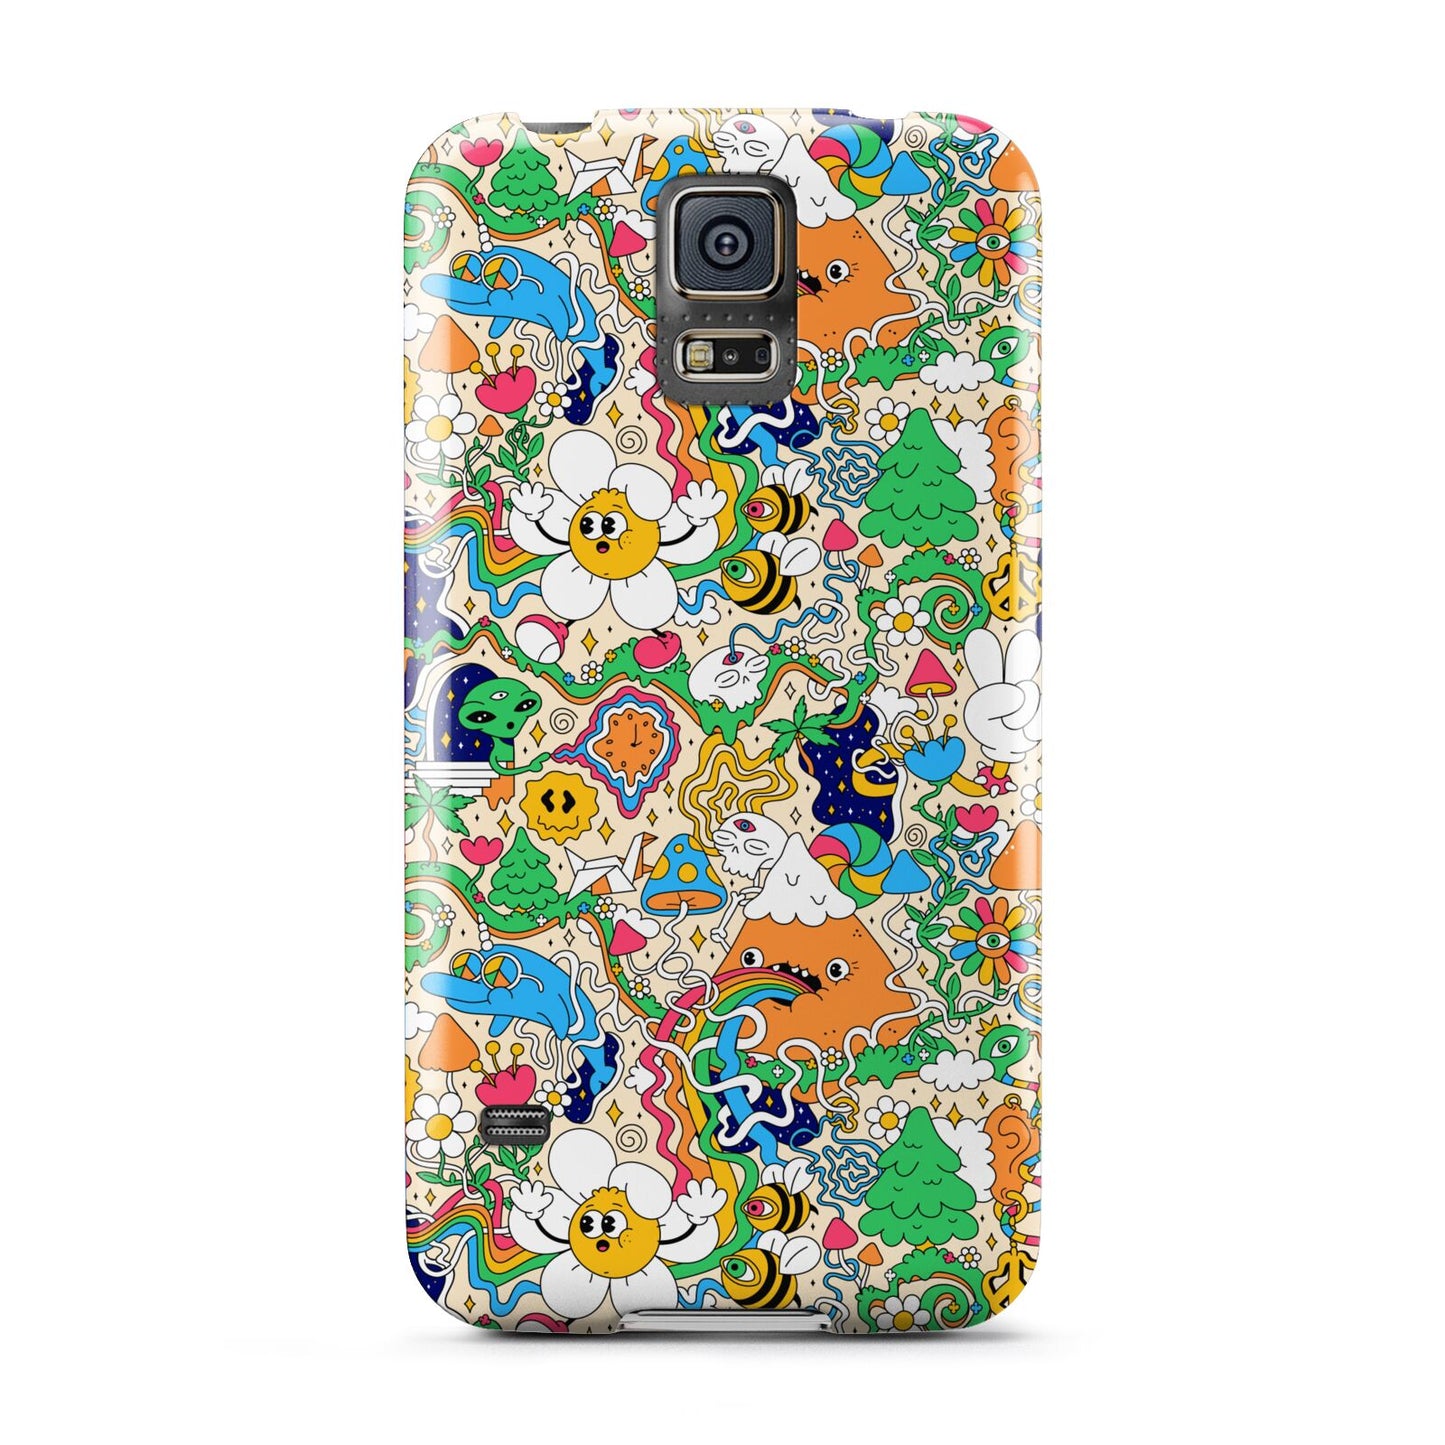 Psychedelic Trippy Samsung Galaxy S5 Case